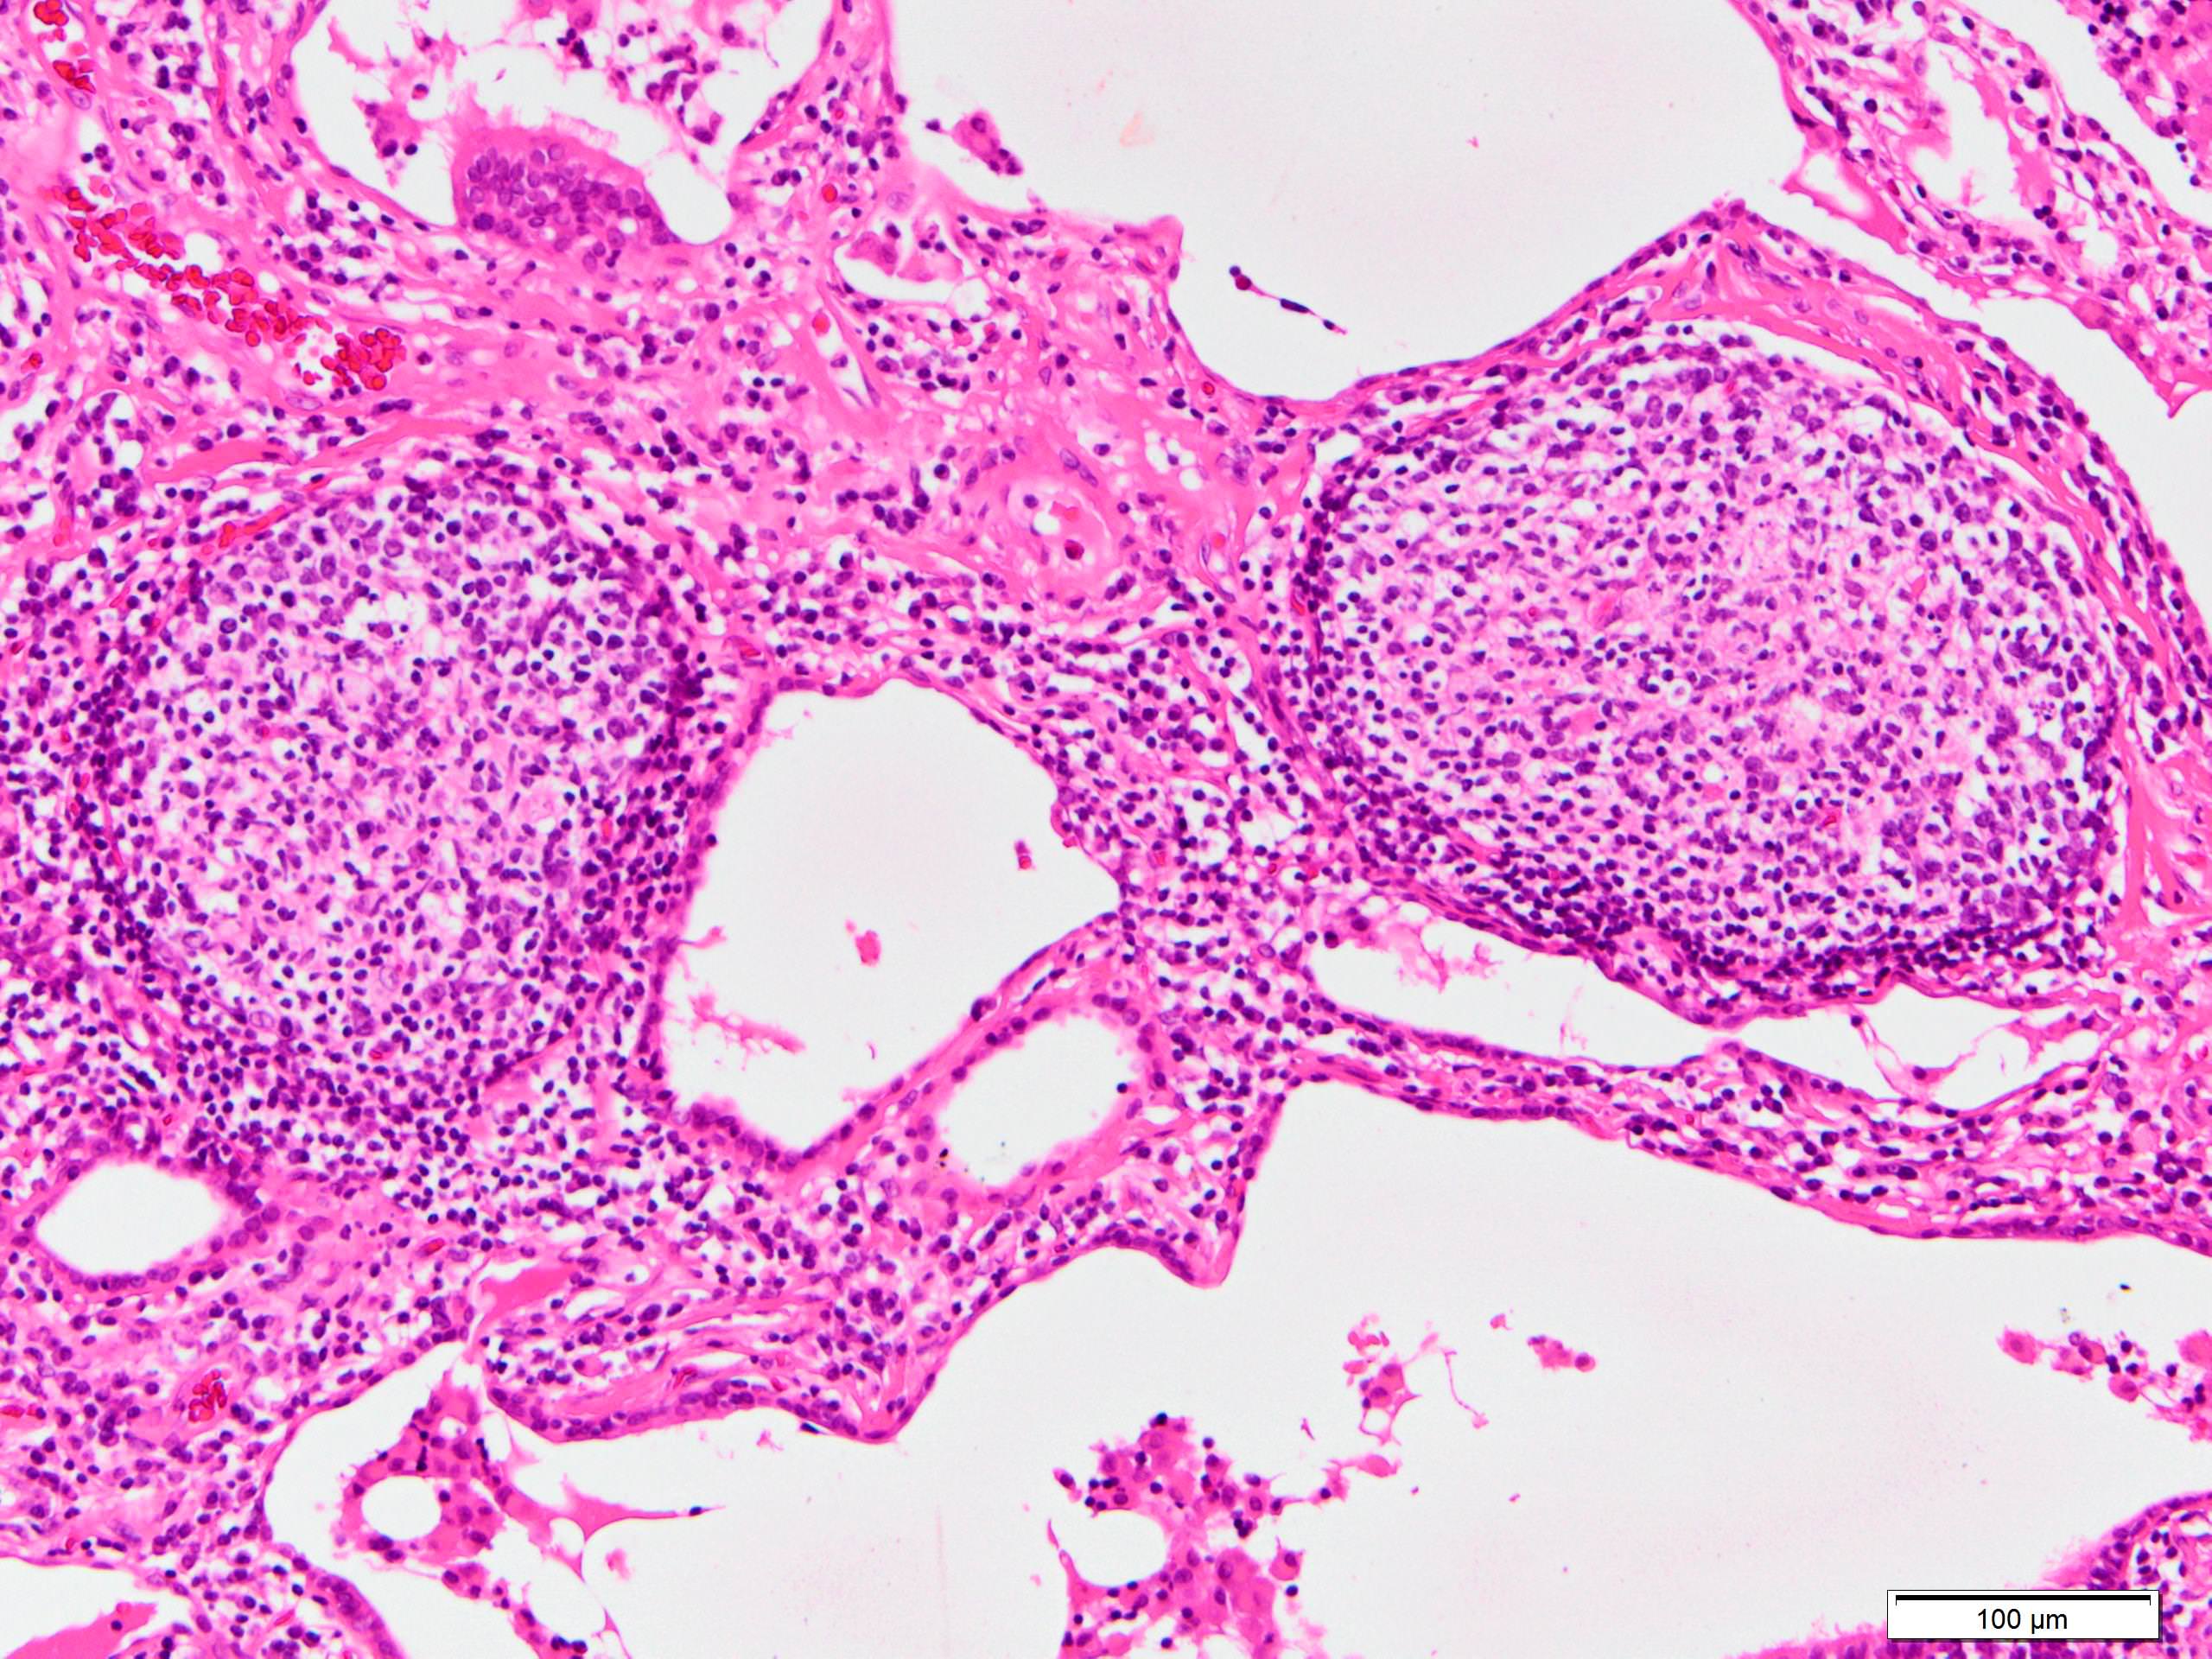 Lymphoid follicles with germinal center